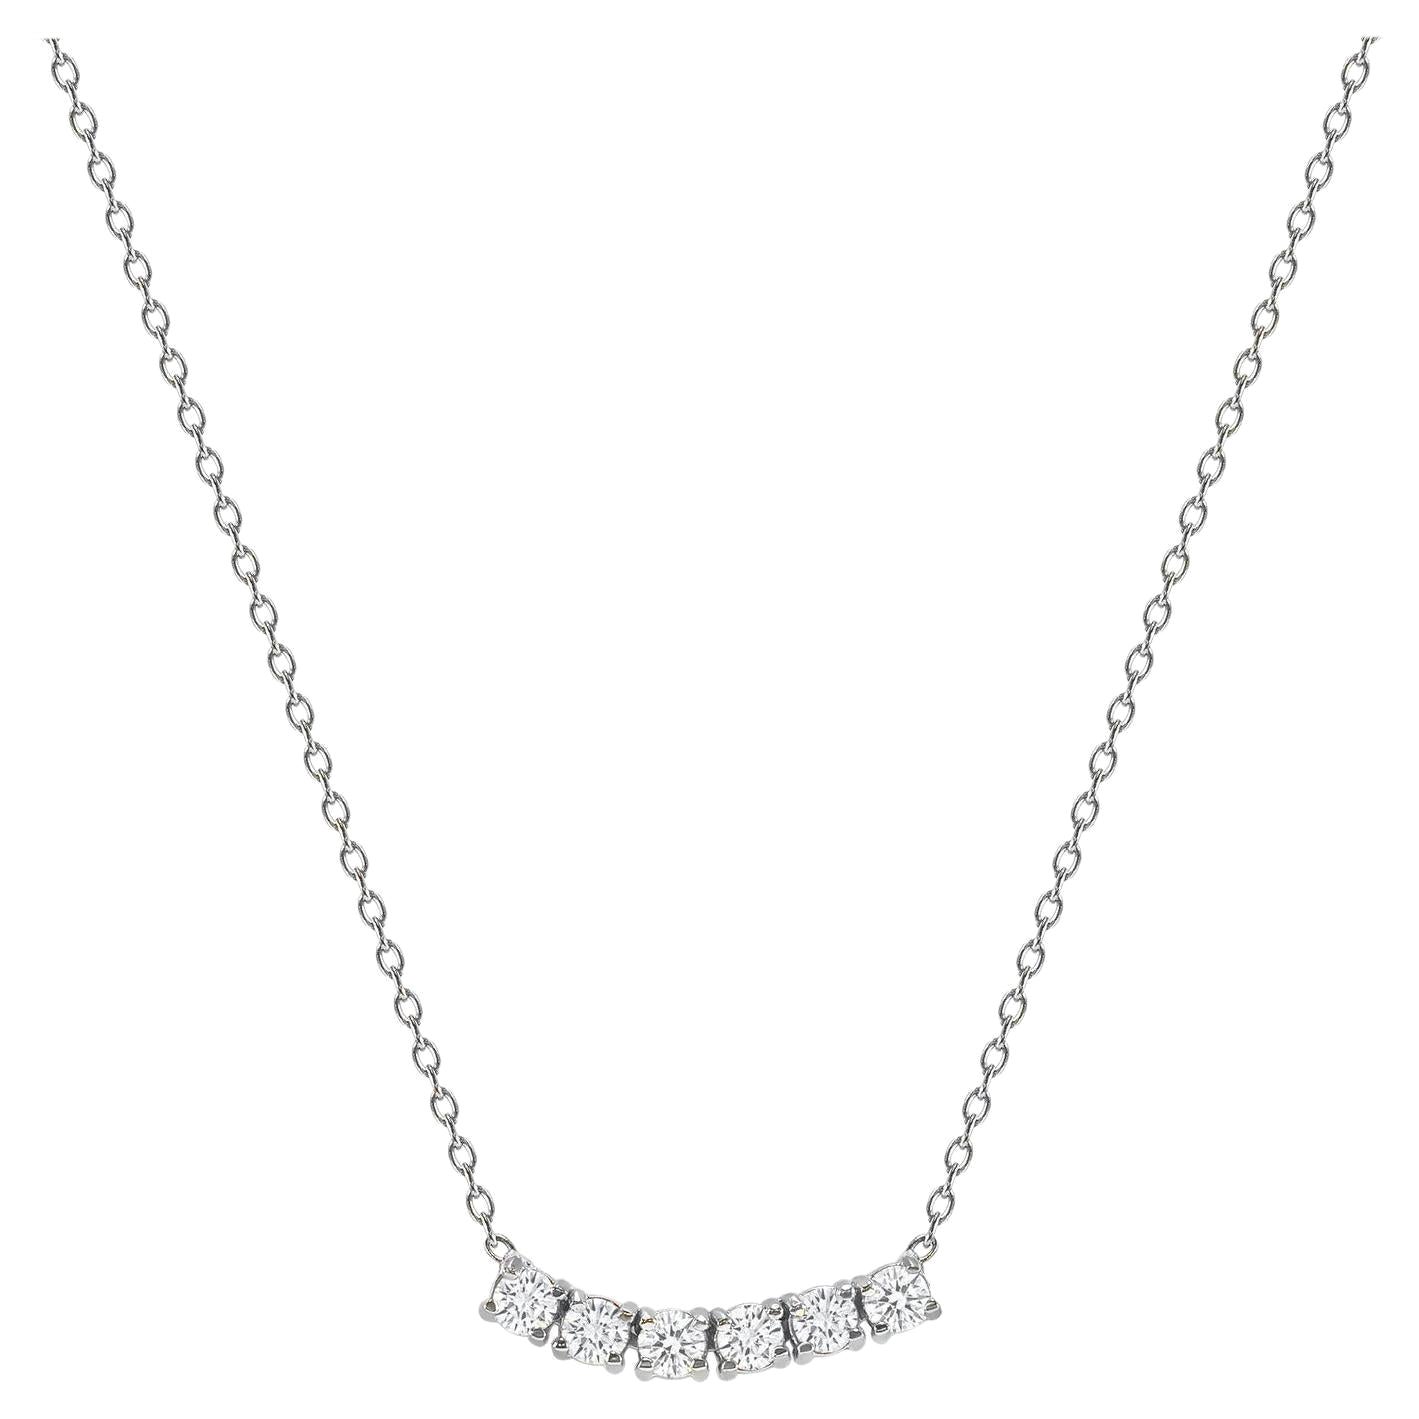 14k White Gold 0.50 Carat Petite Round Diamond Six Stone Curved Necklace